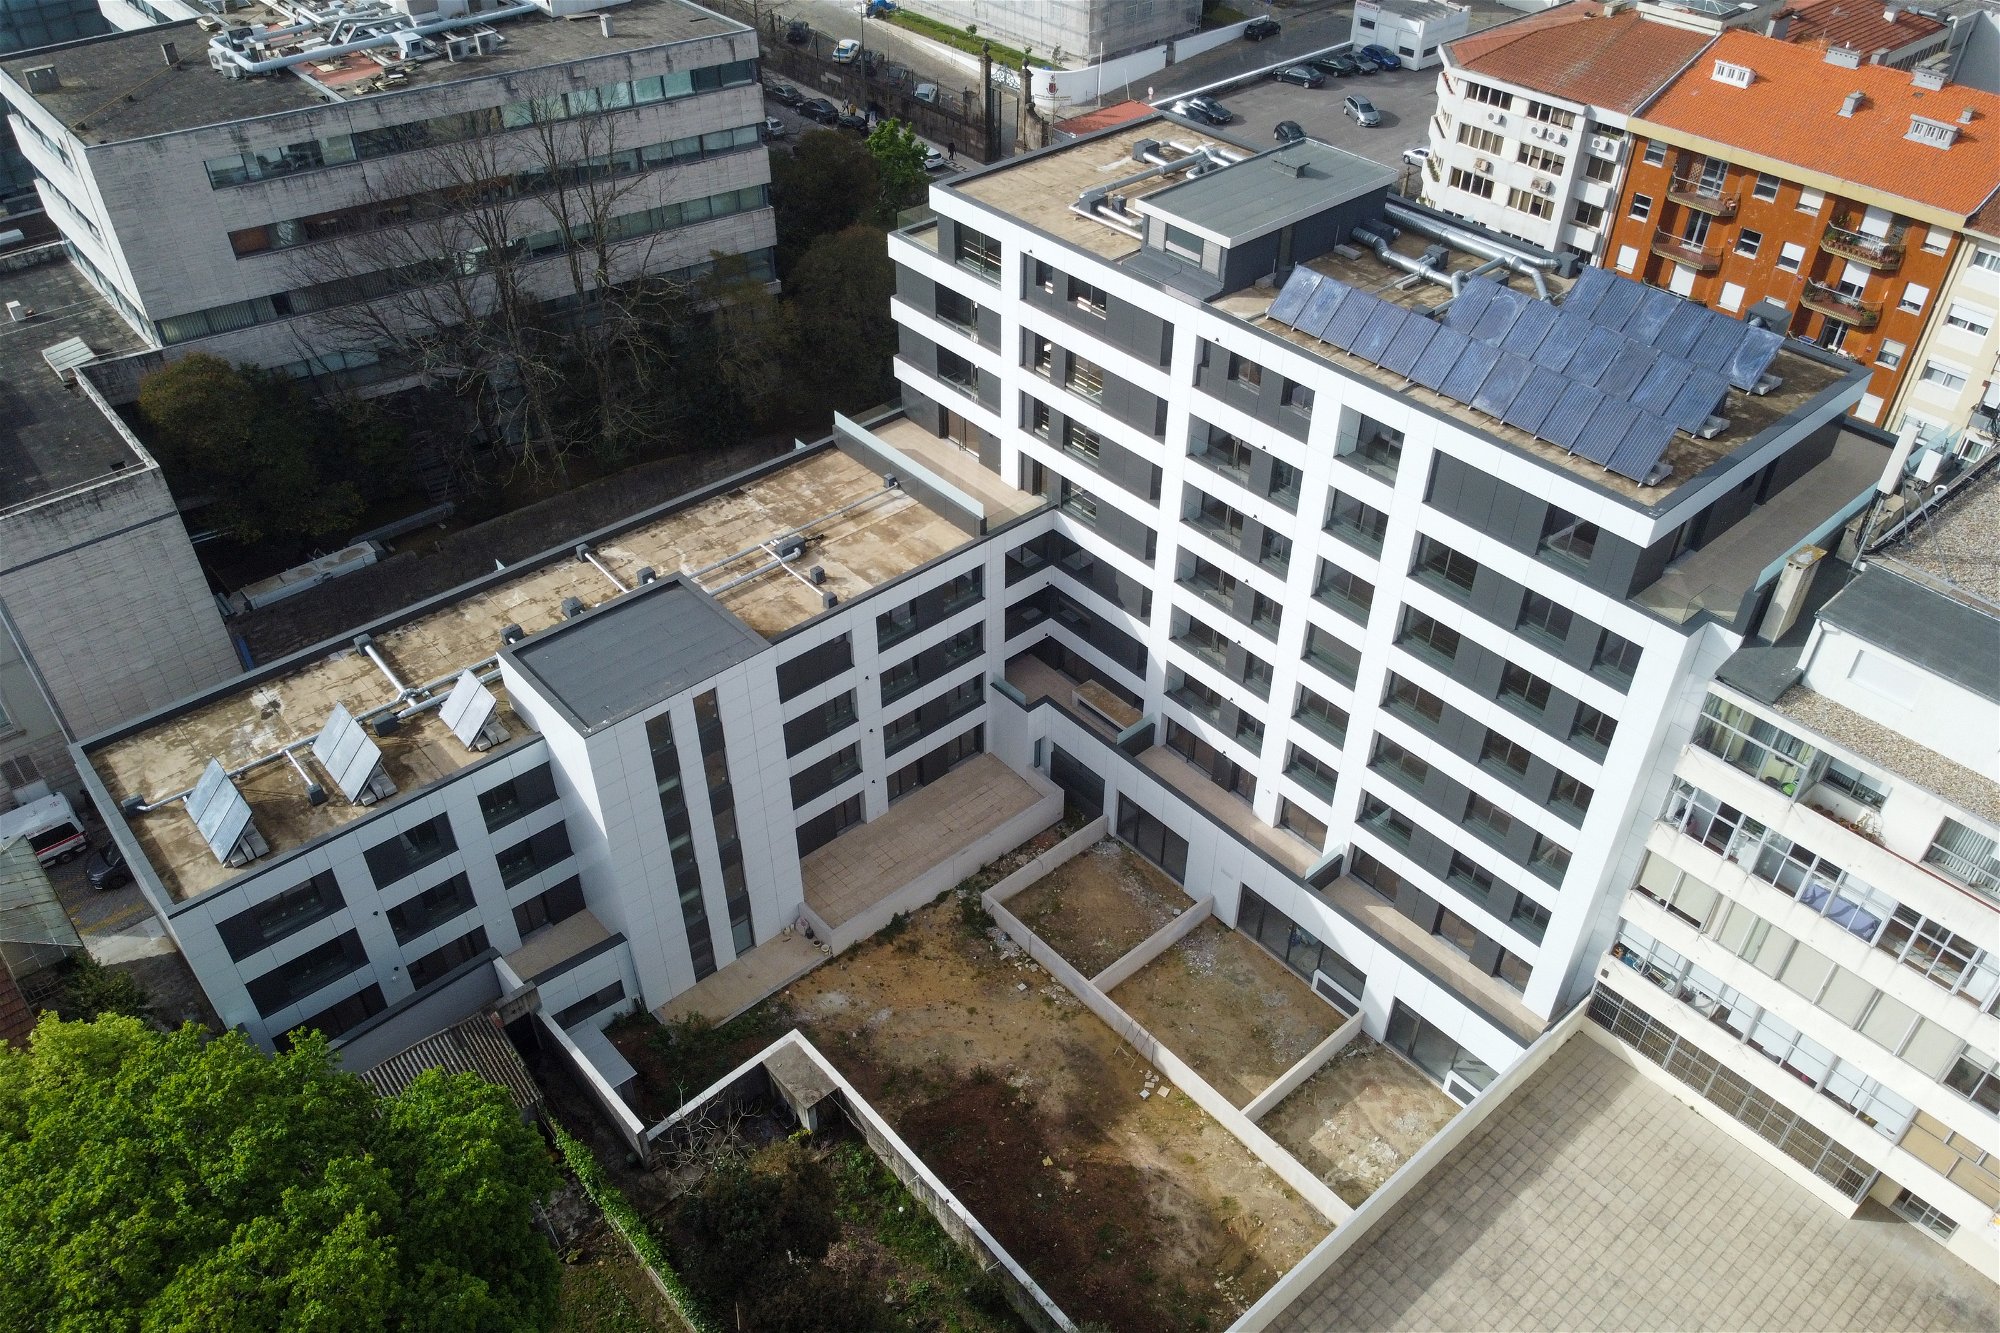 3 bedrooms apartment with balcony in Boavista, Porto 3509002335